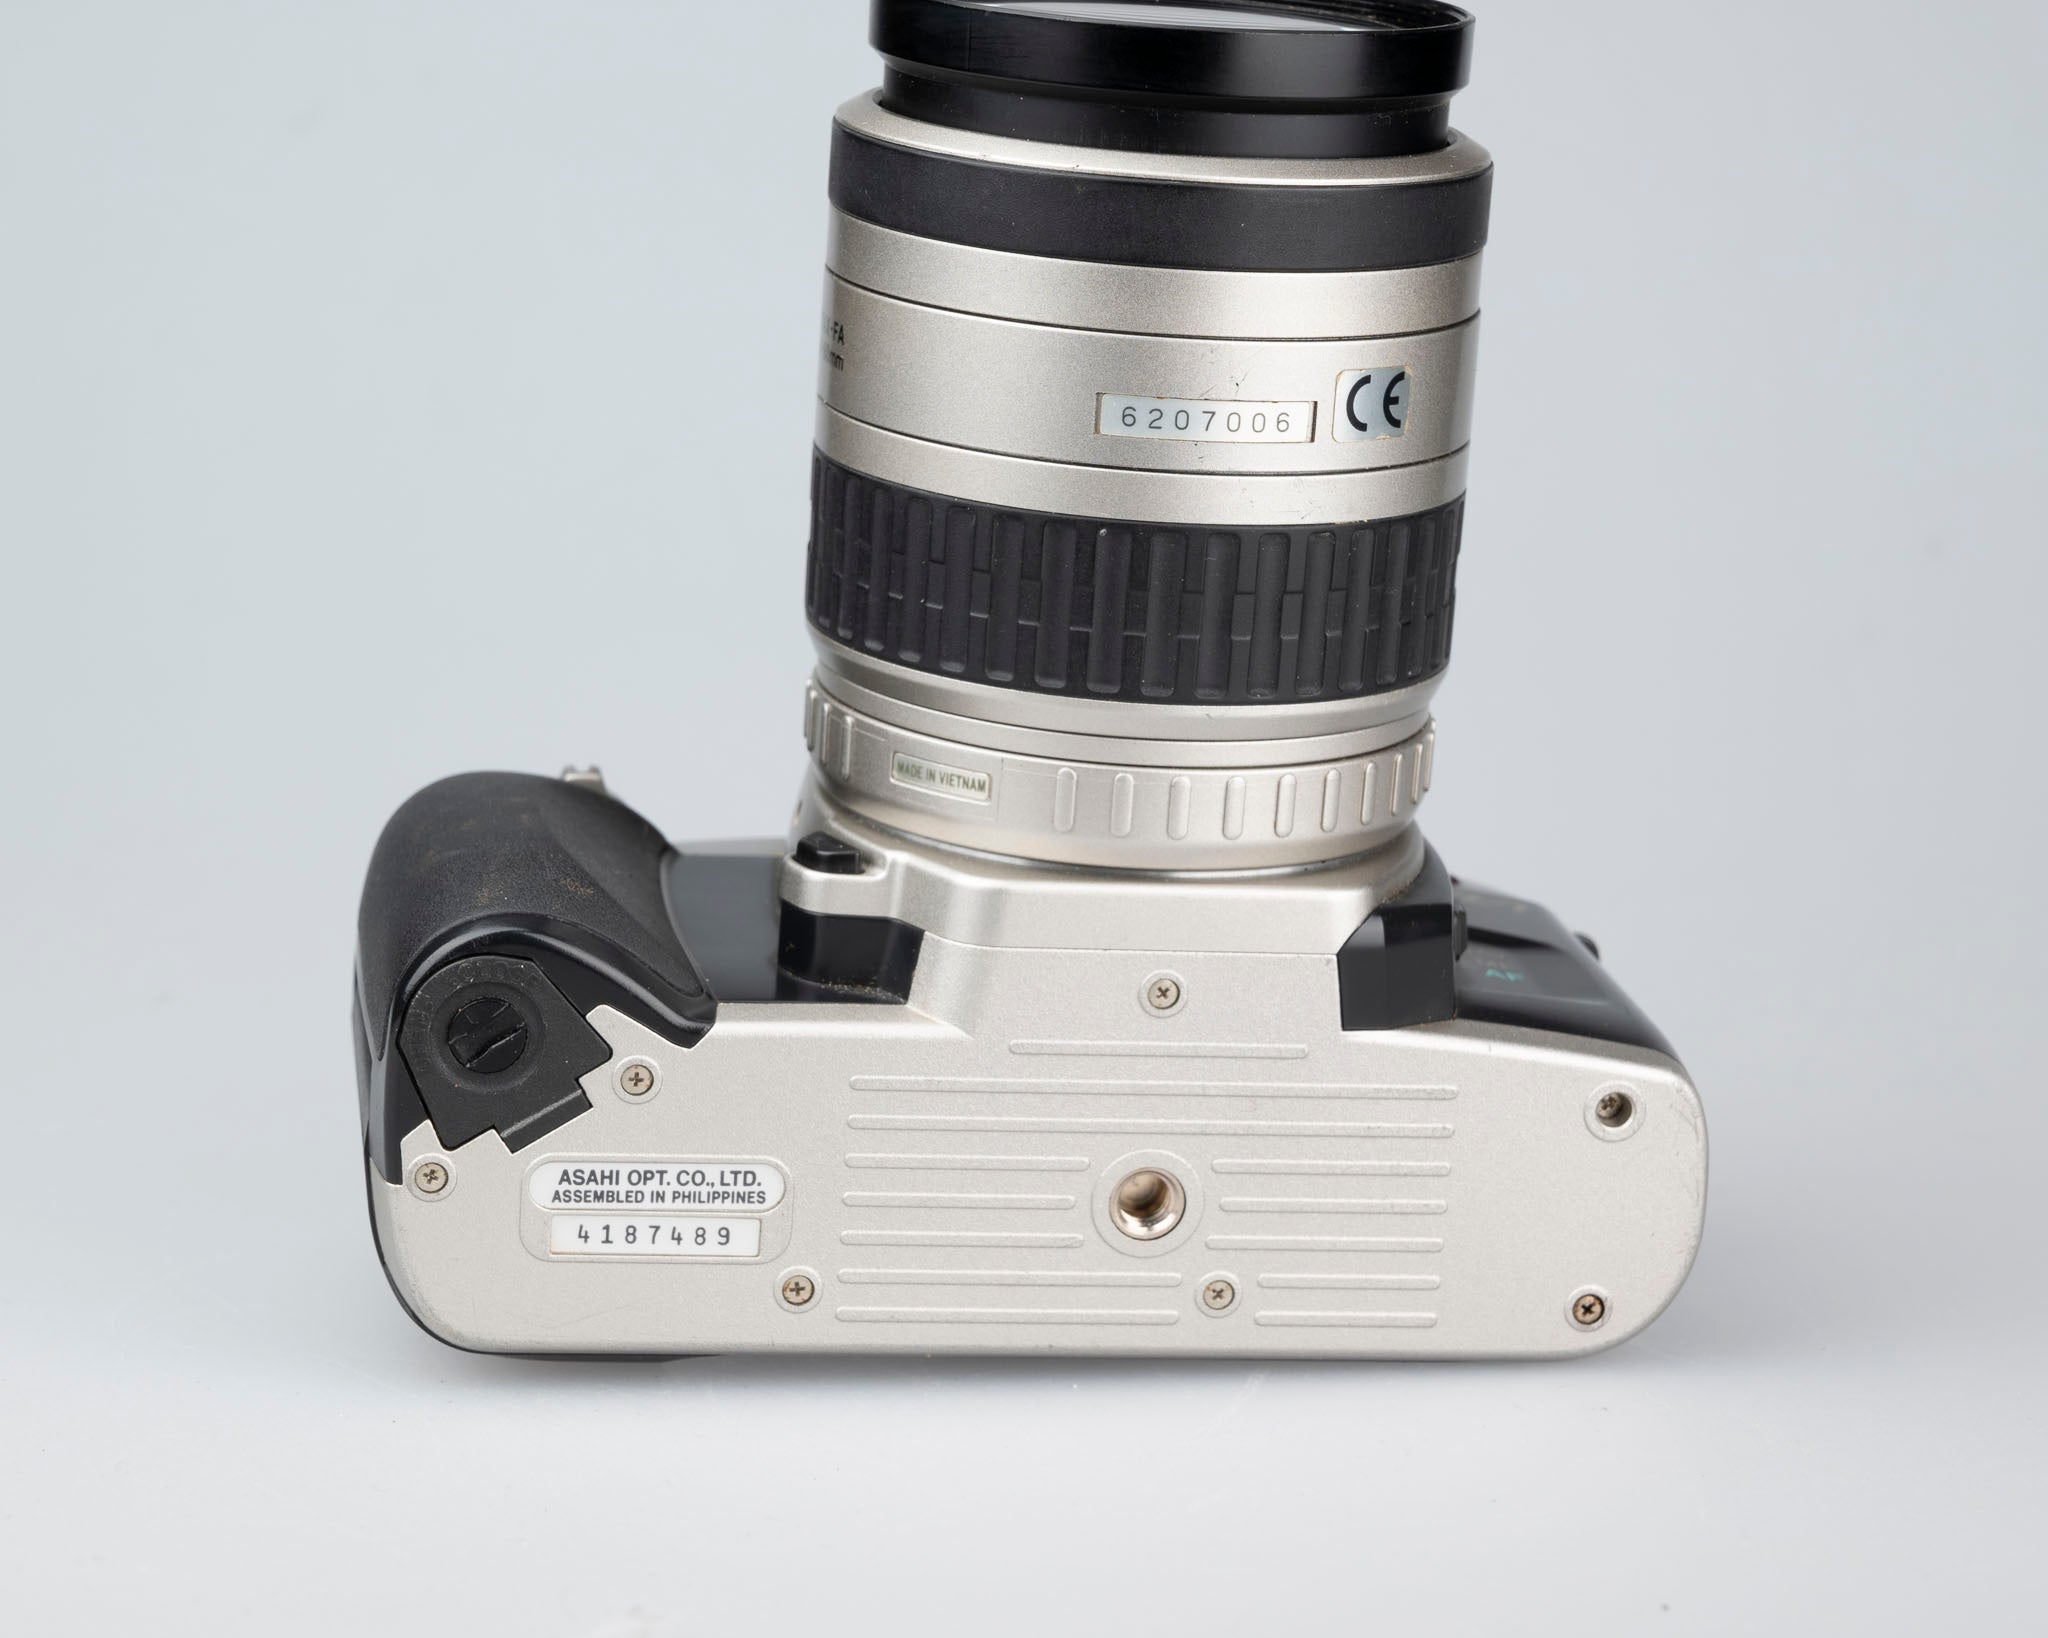 Pentax MZ-7 35mm SLR w/ SMC Pentax-FA 28-80mm lens – New Wave Pool